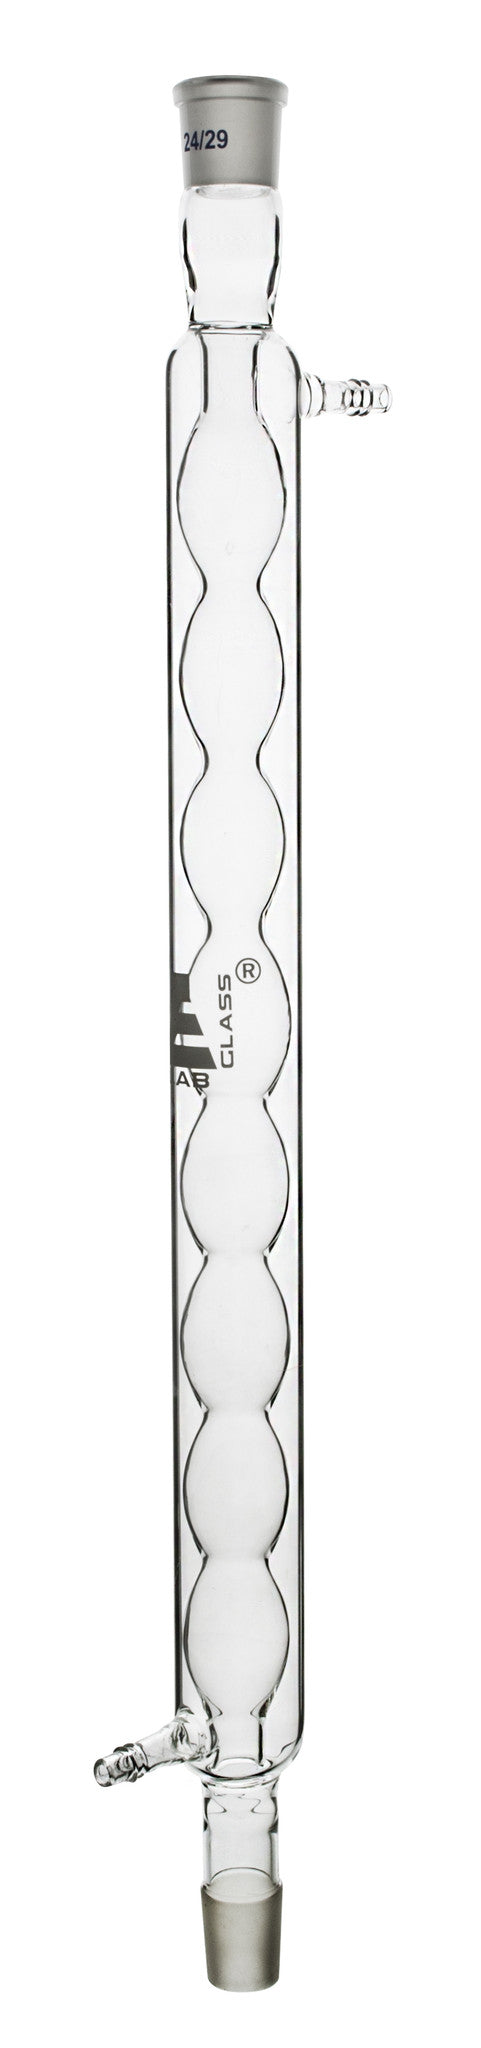 Condenser - Allihn Bulb, Socket size 14/23 & Cone size 14/23, effective length 16mm